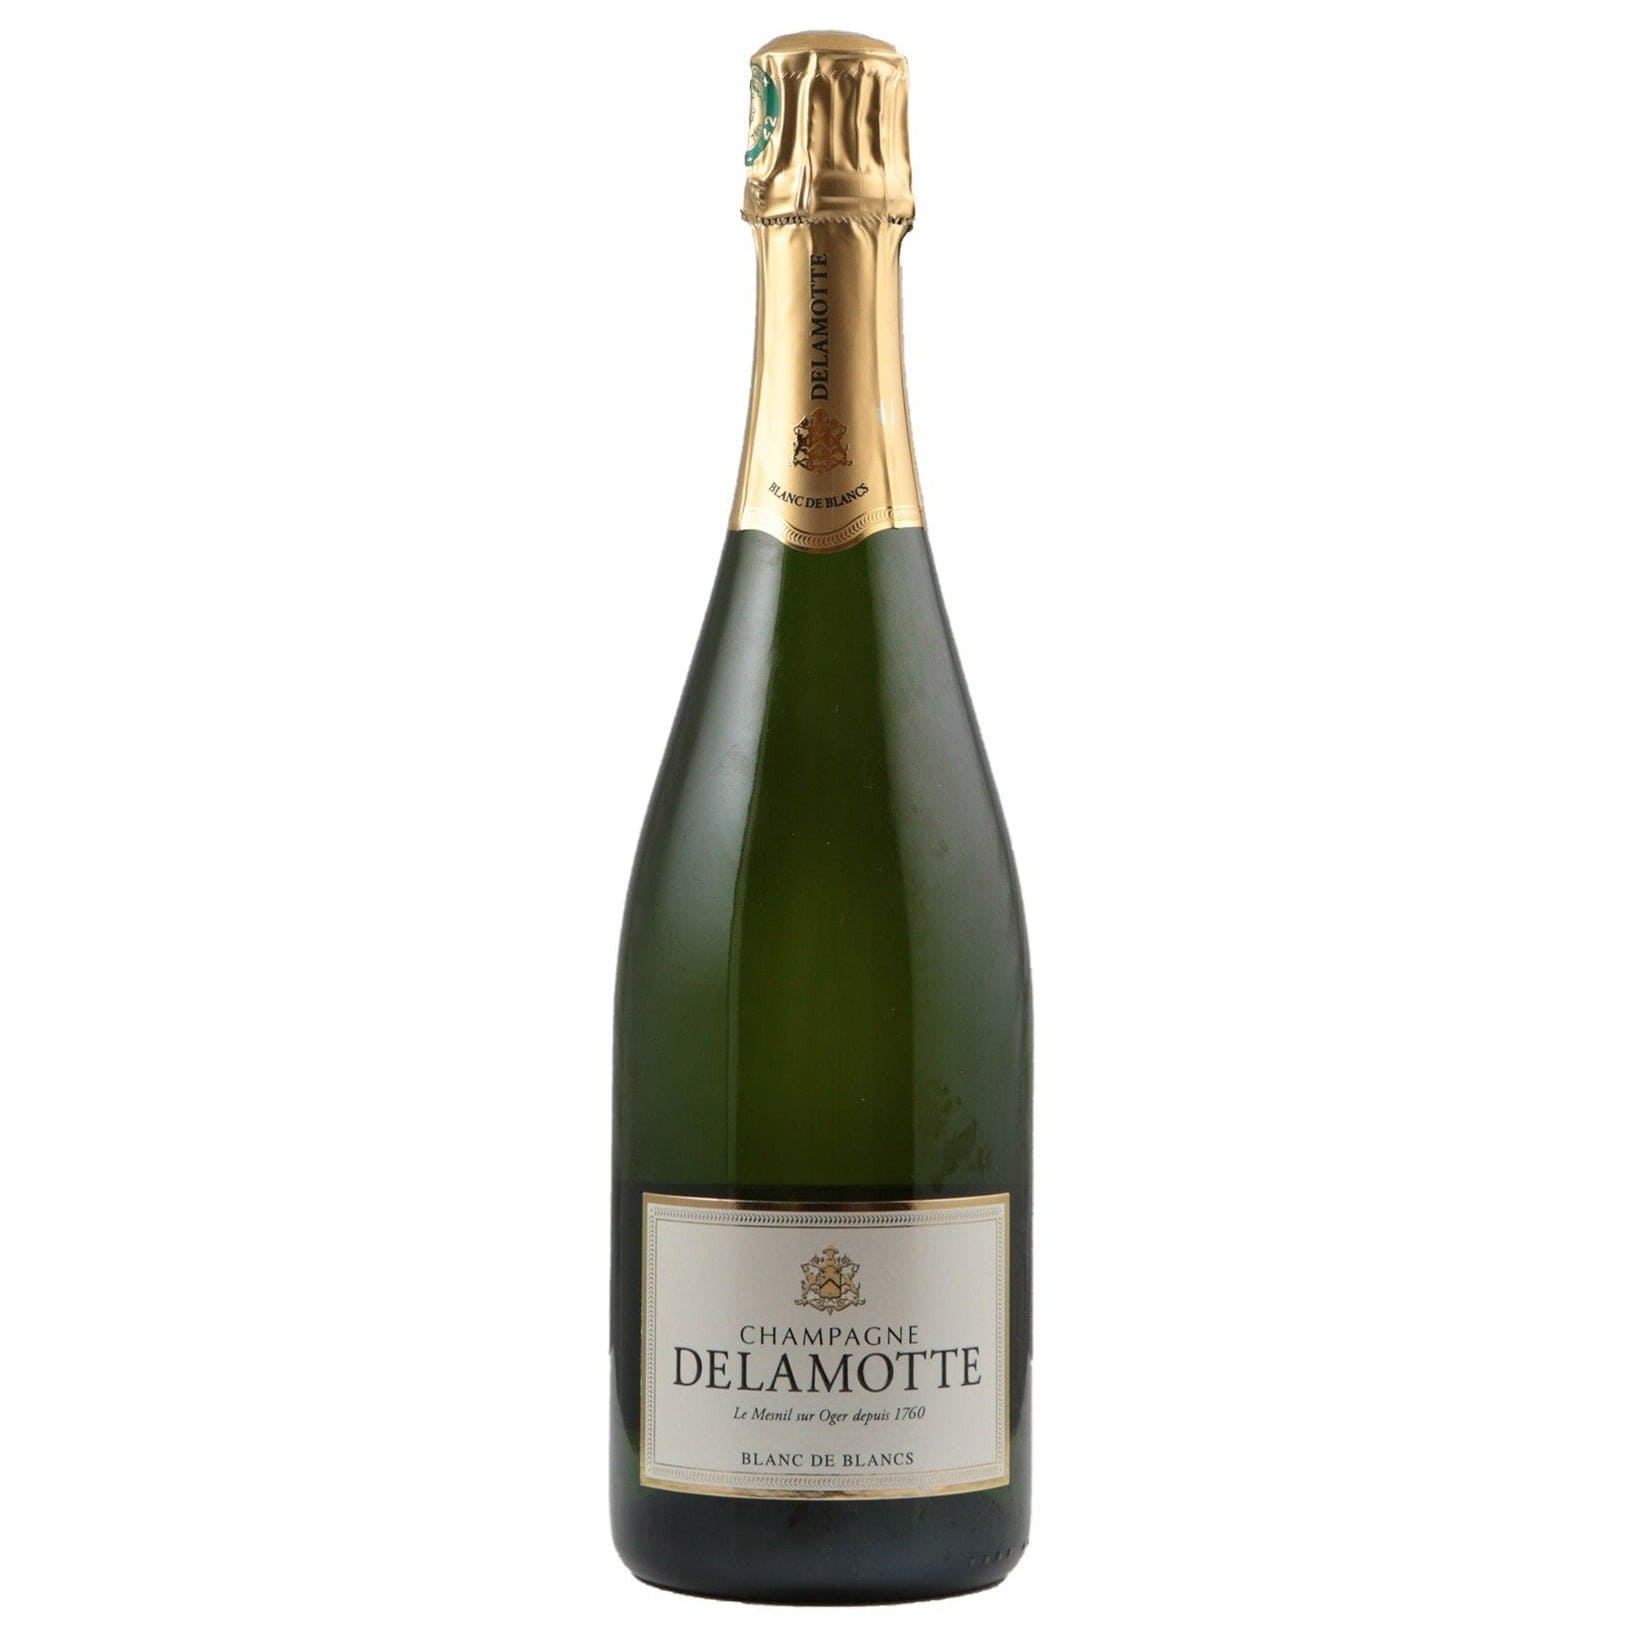 Single bottle of Sparkling wine Delamotte, Blanc de Blancs, Champagne, NV 70% Pinot Noir & 30% Chardonnay